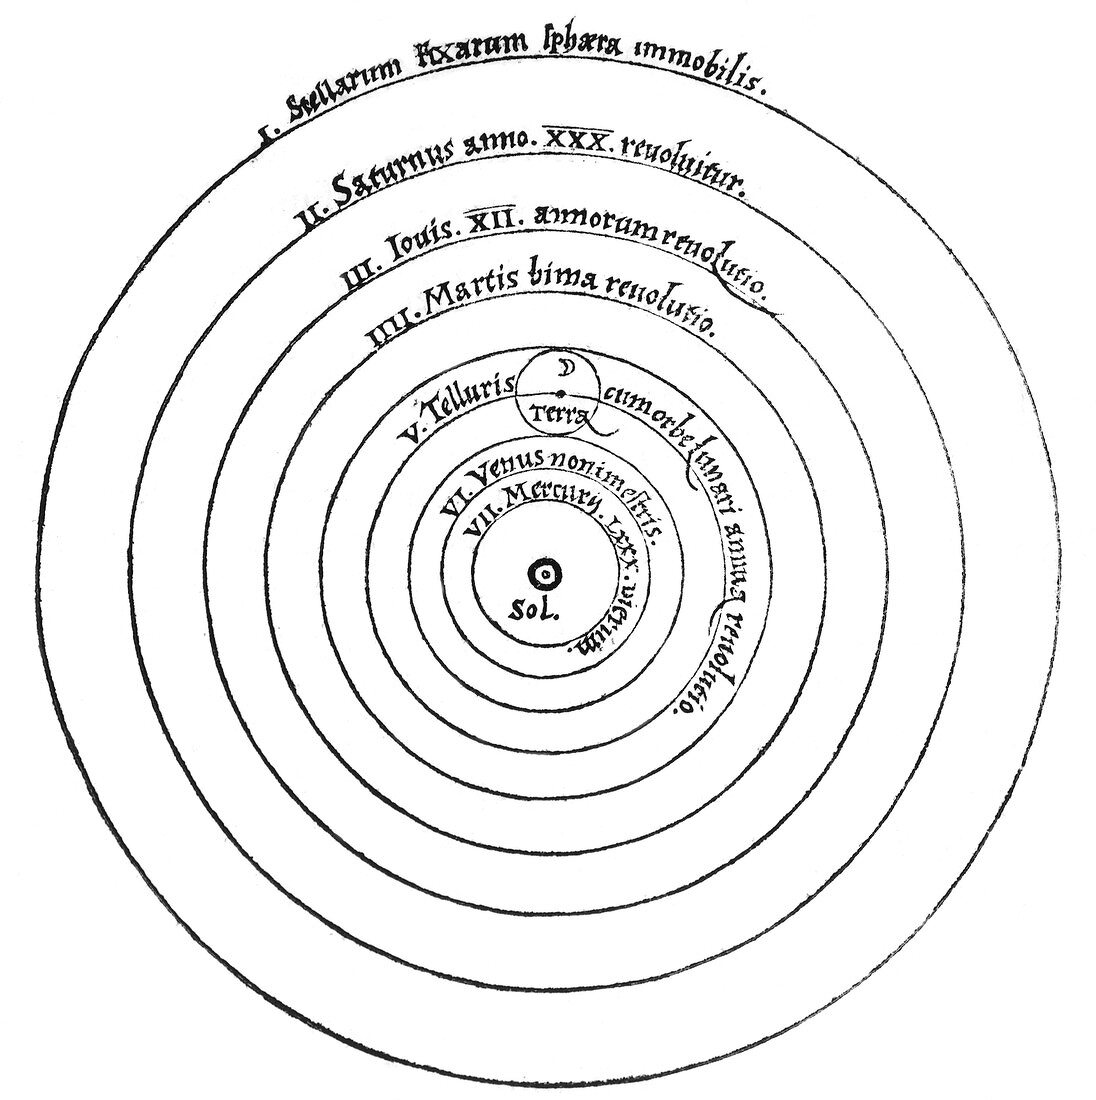 Copernicus's heliocentric model,1543